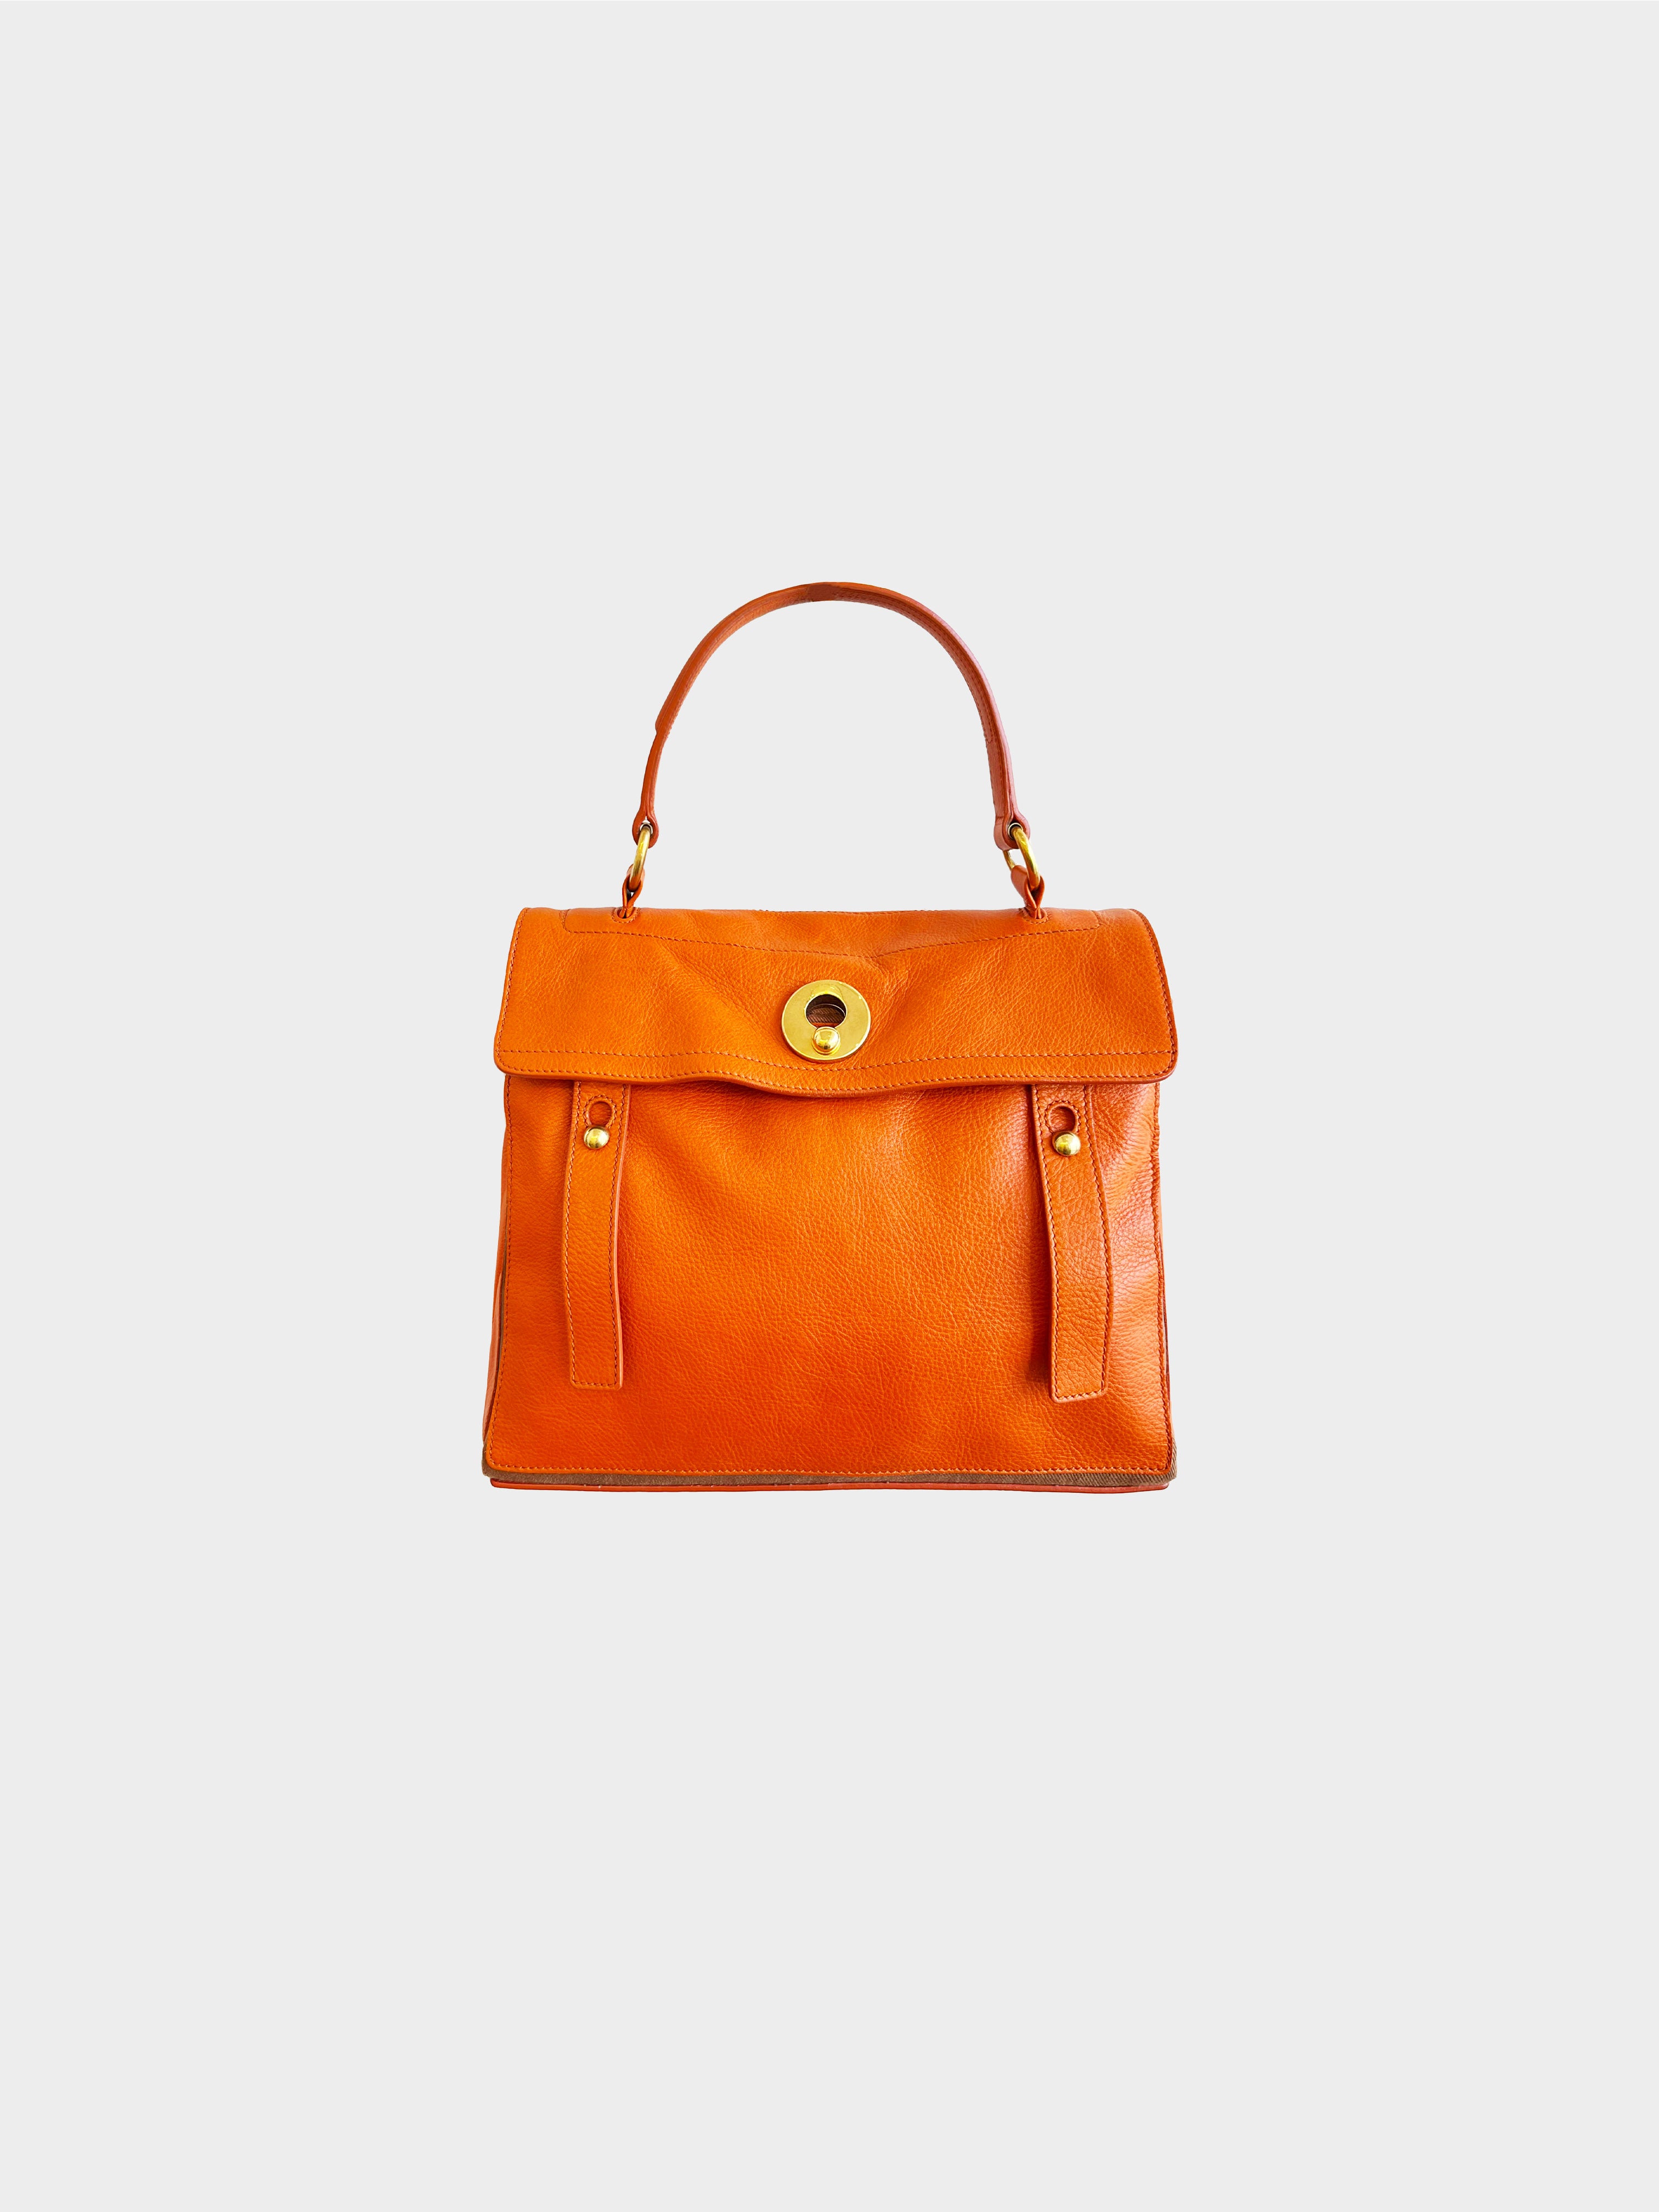 Yves Saint Laurent 2000s Orange Muse Two Handbag